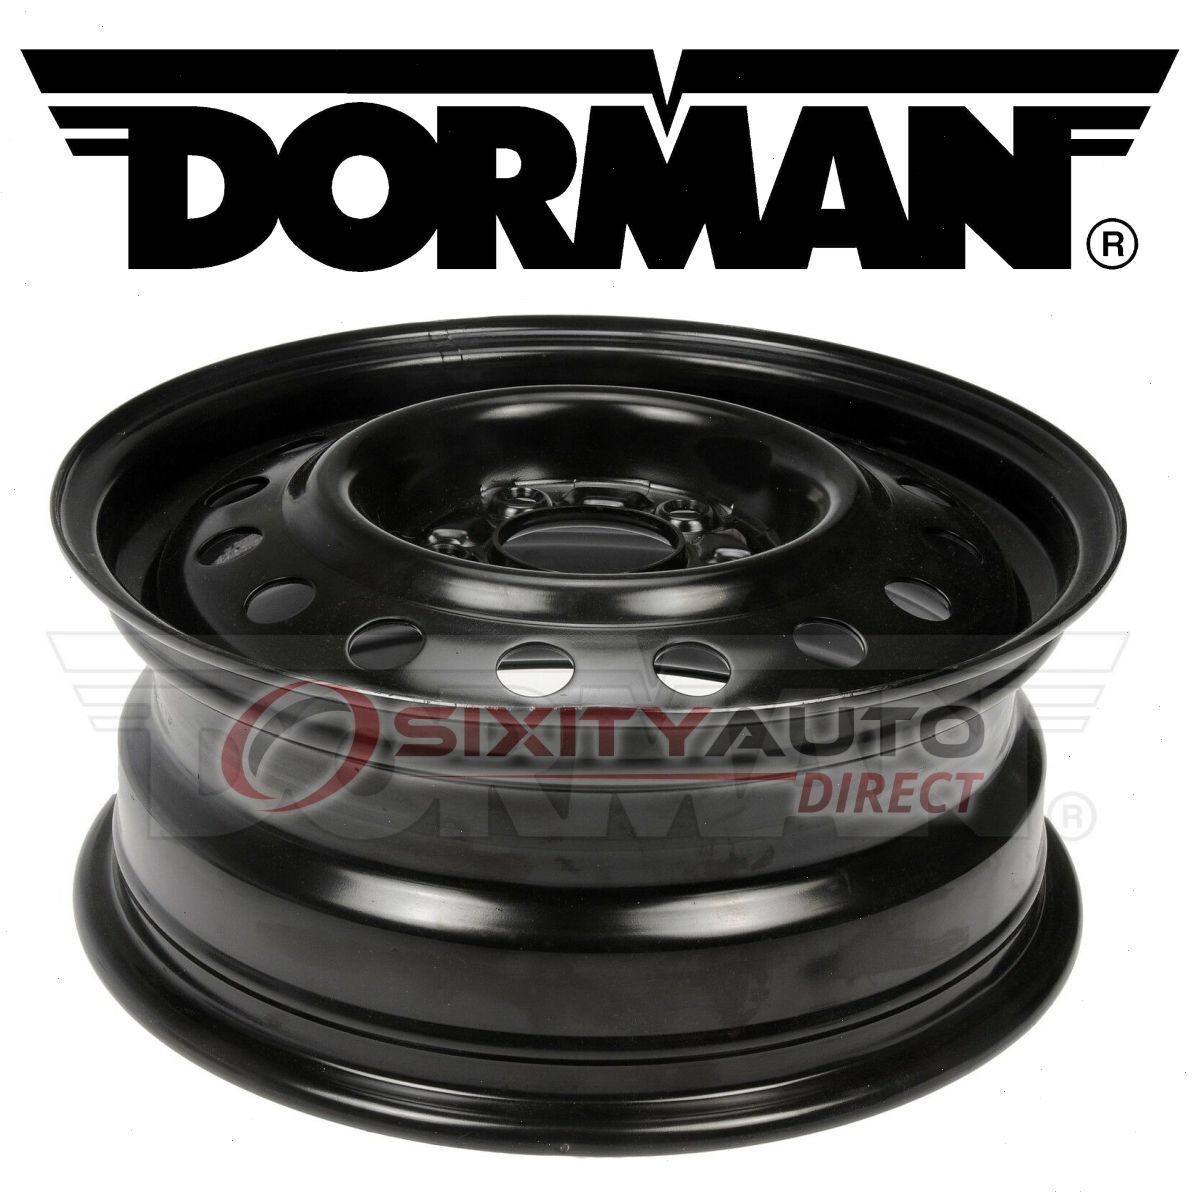 Dorman Wheel for 1997-2003 Oldsmobile Silhouette Tire  tc